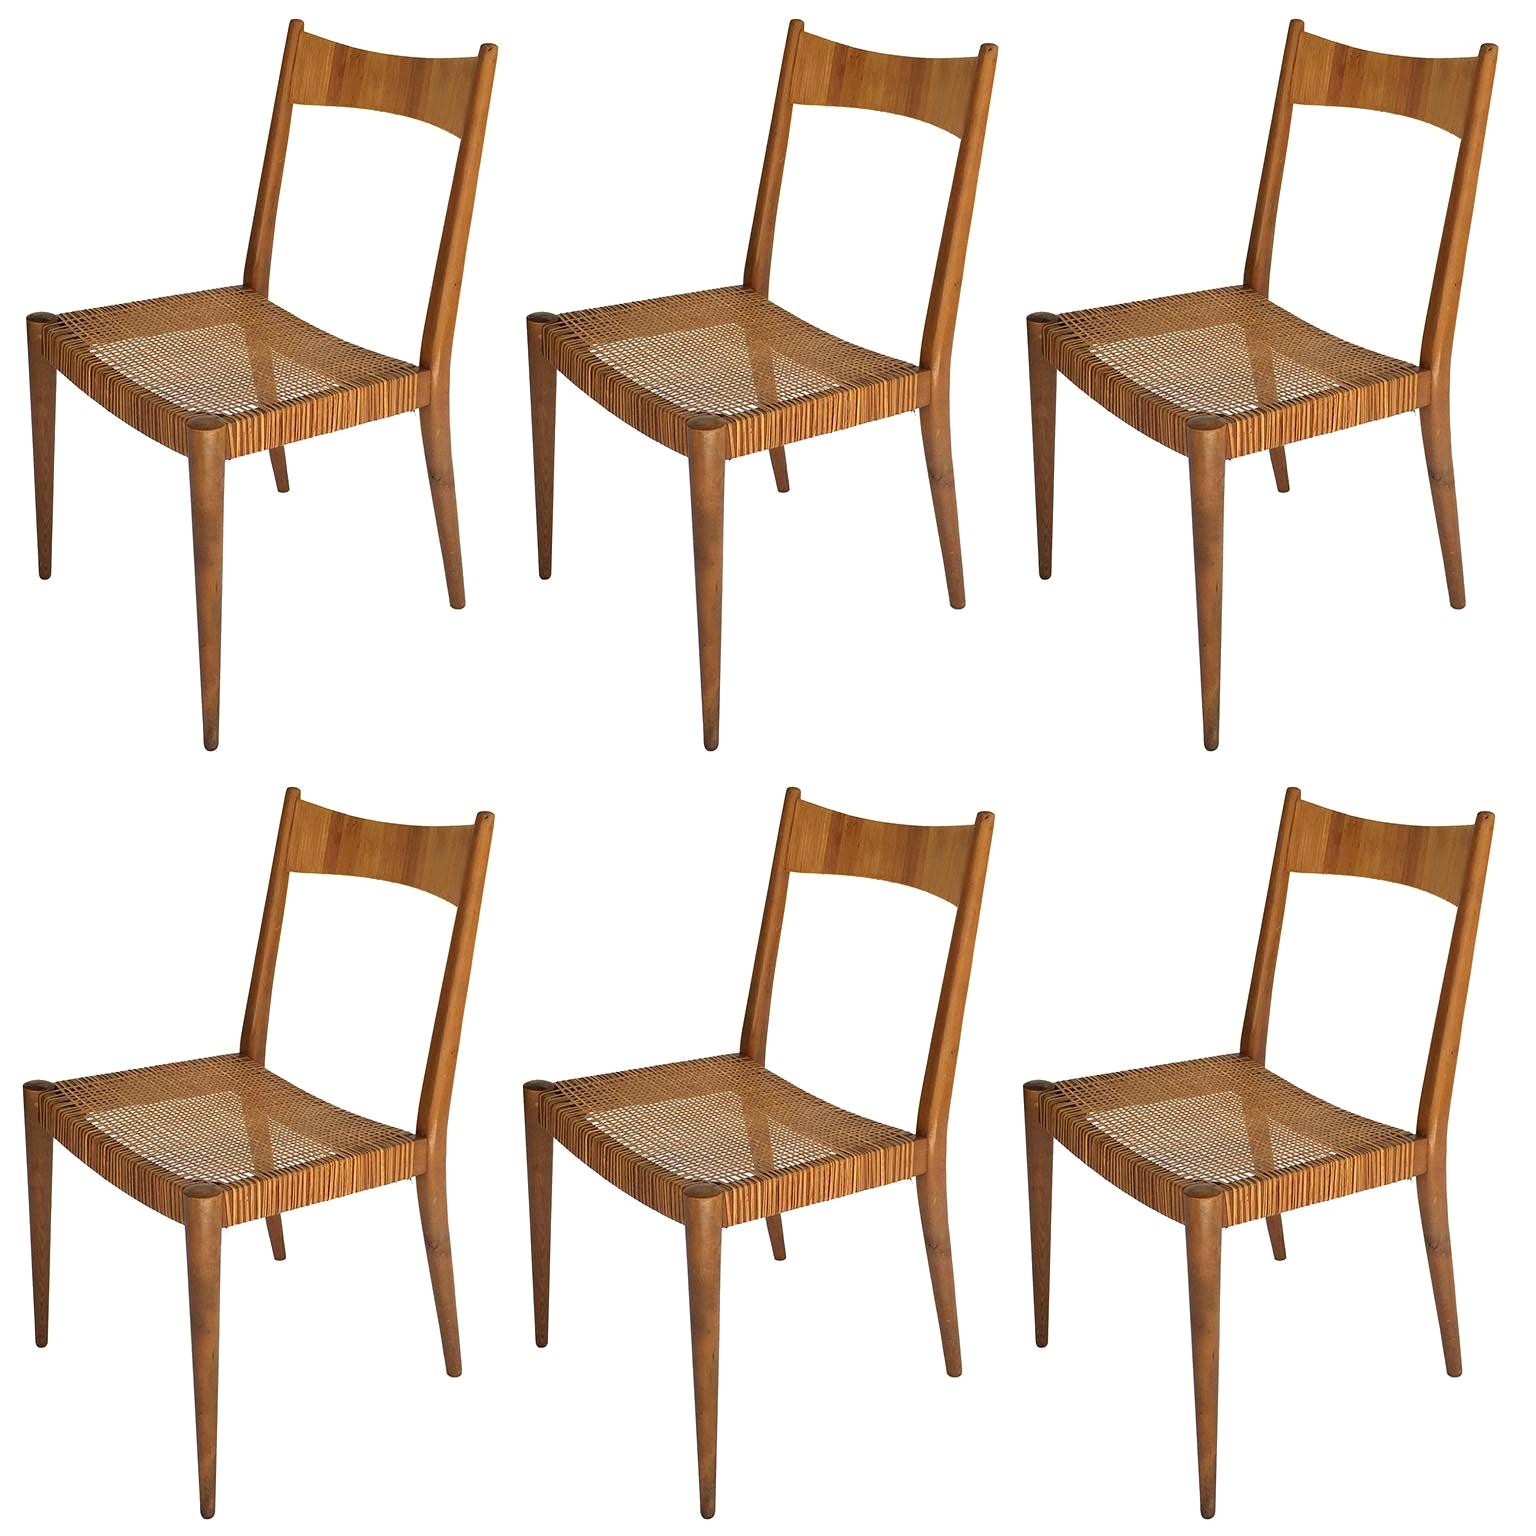 Six Anna-Lülja Praun Chairs, Wood Cane Wicker, 1950s